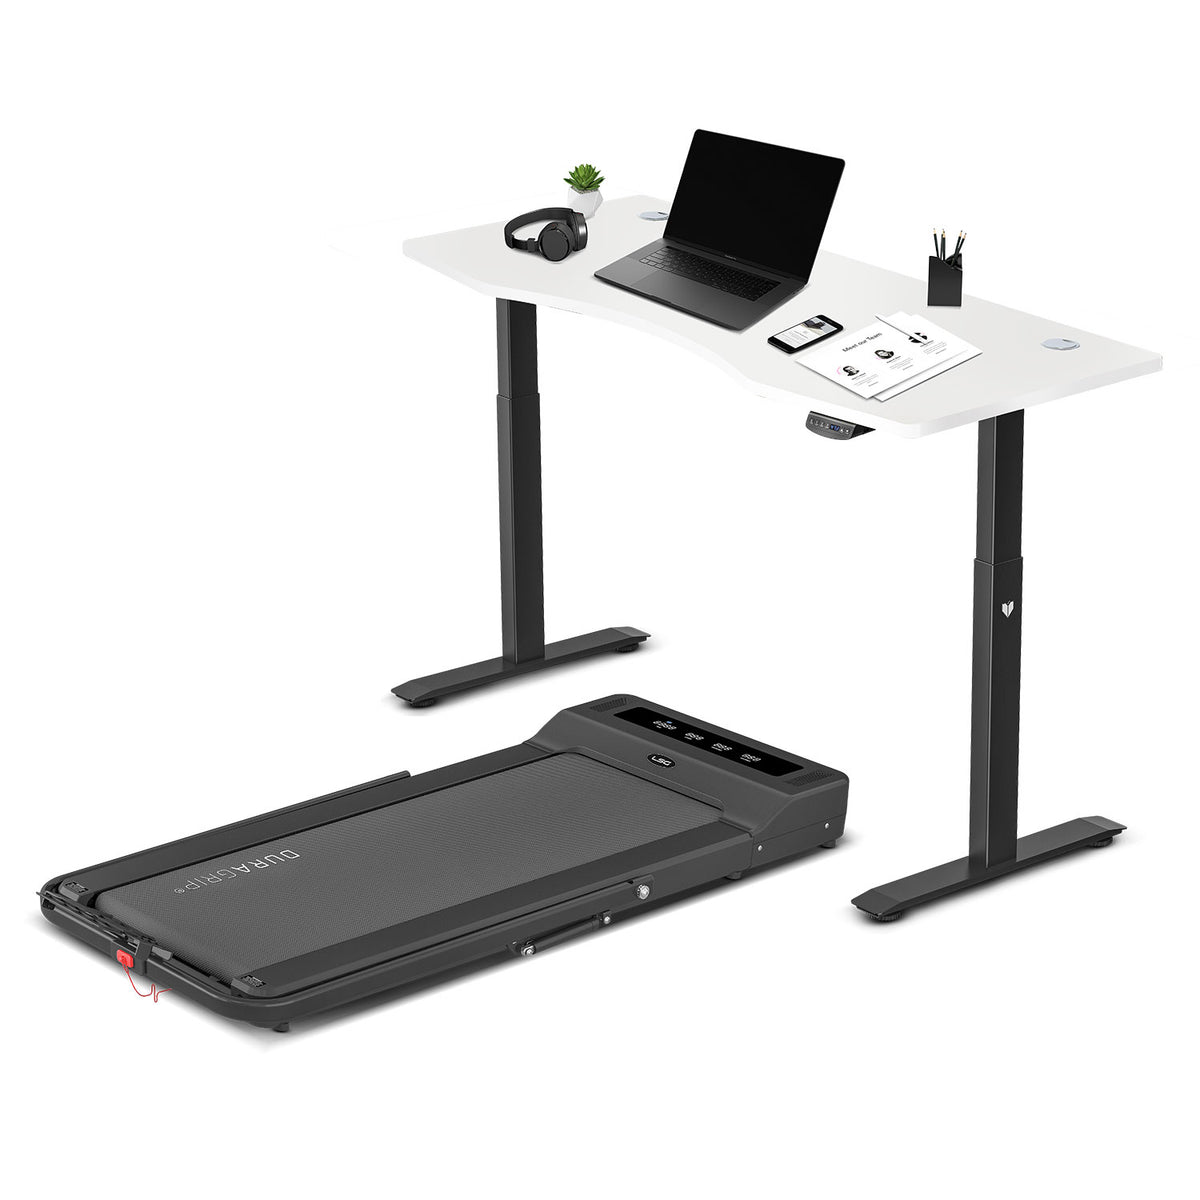 LSG Nimbus Walking Pad Treadmill + ErgoDesk Automatic Standing Desk